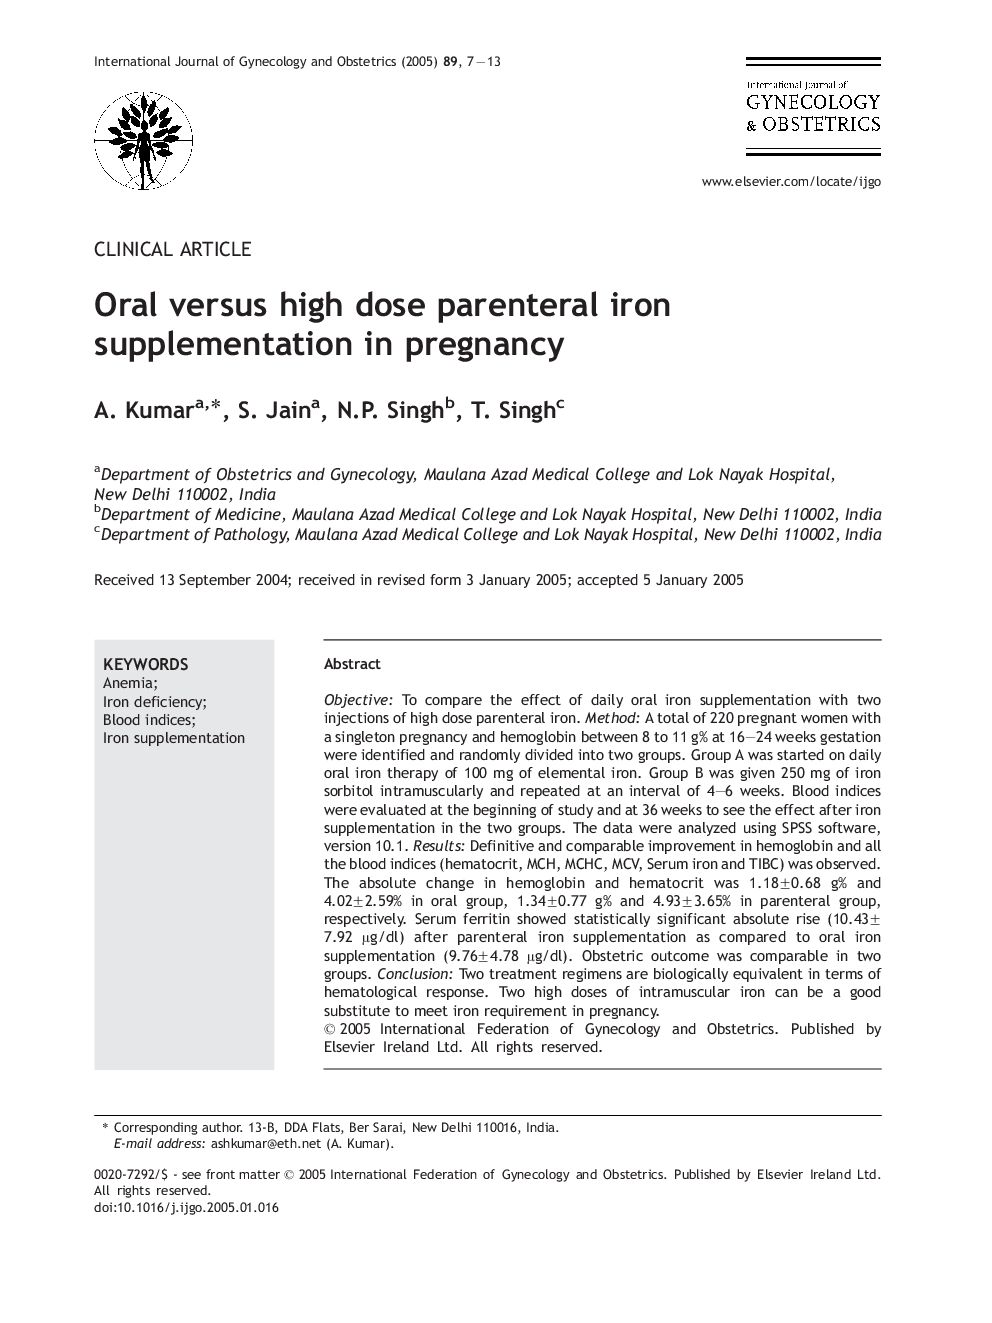 Oral versus high dose parenteral iron supplementation in pregnancy